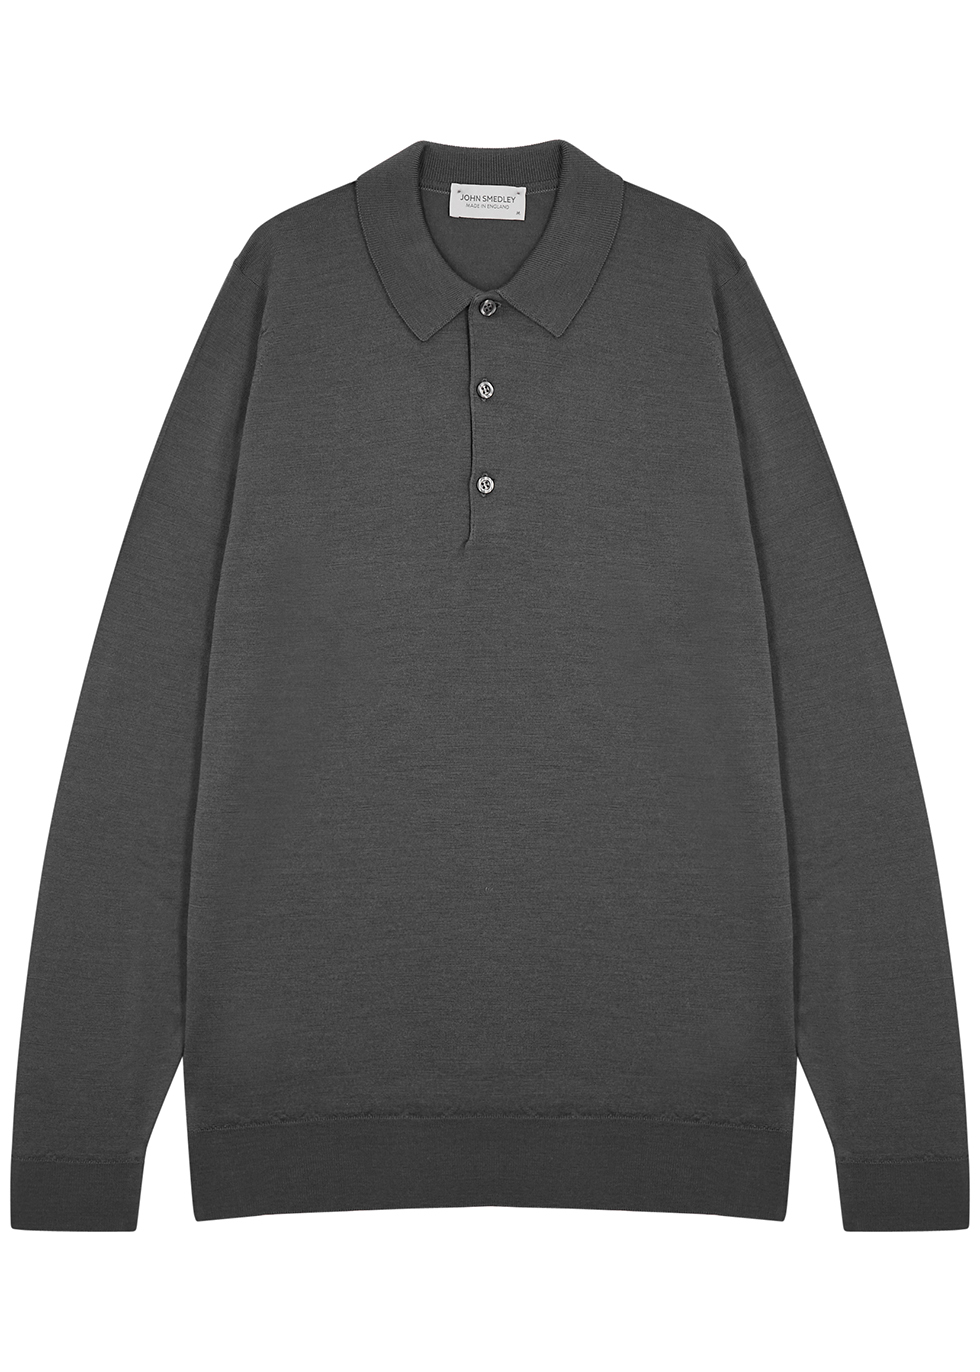 John Smedley Belper grey merino wool polo shirt - Harvey Nichols